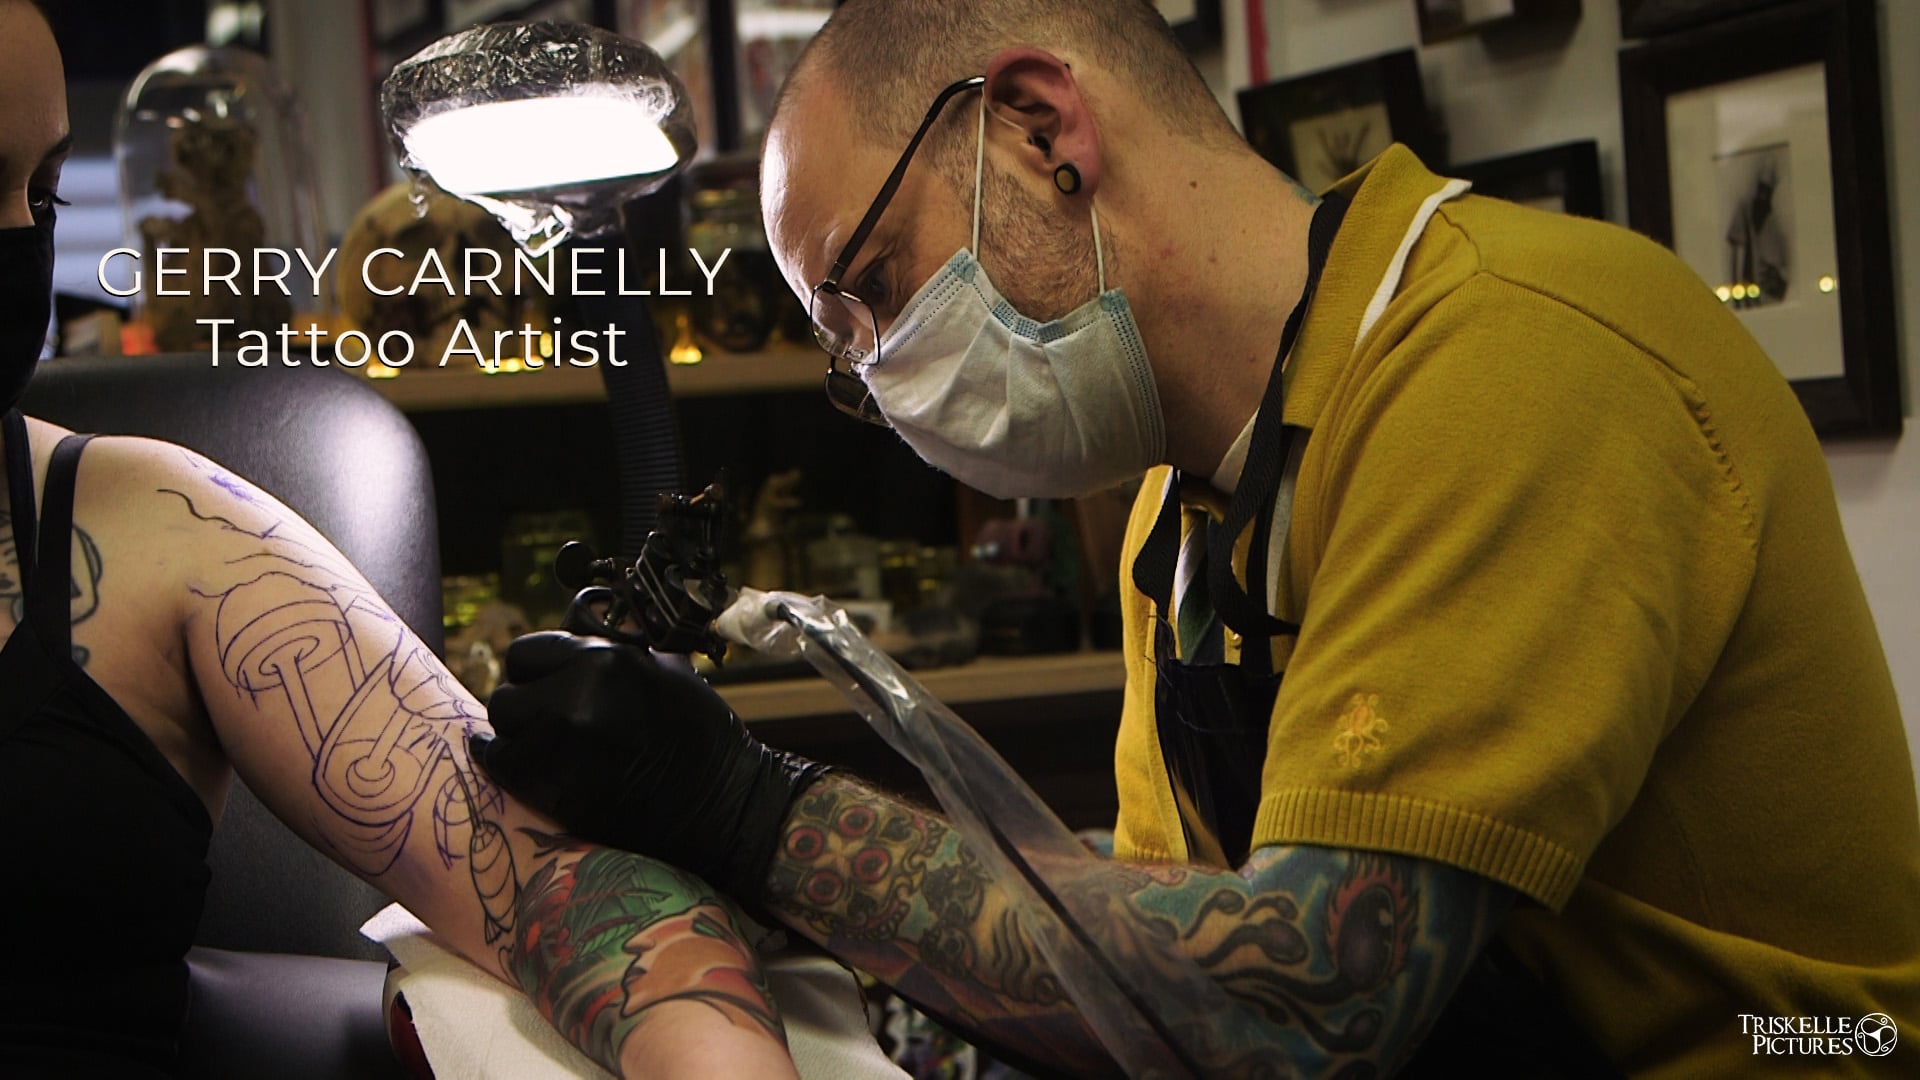 Gerry Carnelly Tattoo Artist - Portrait Film